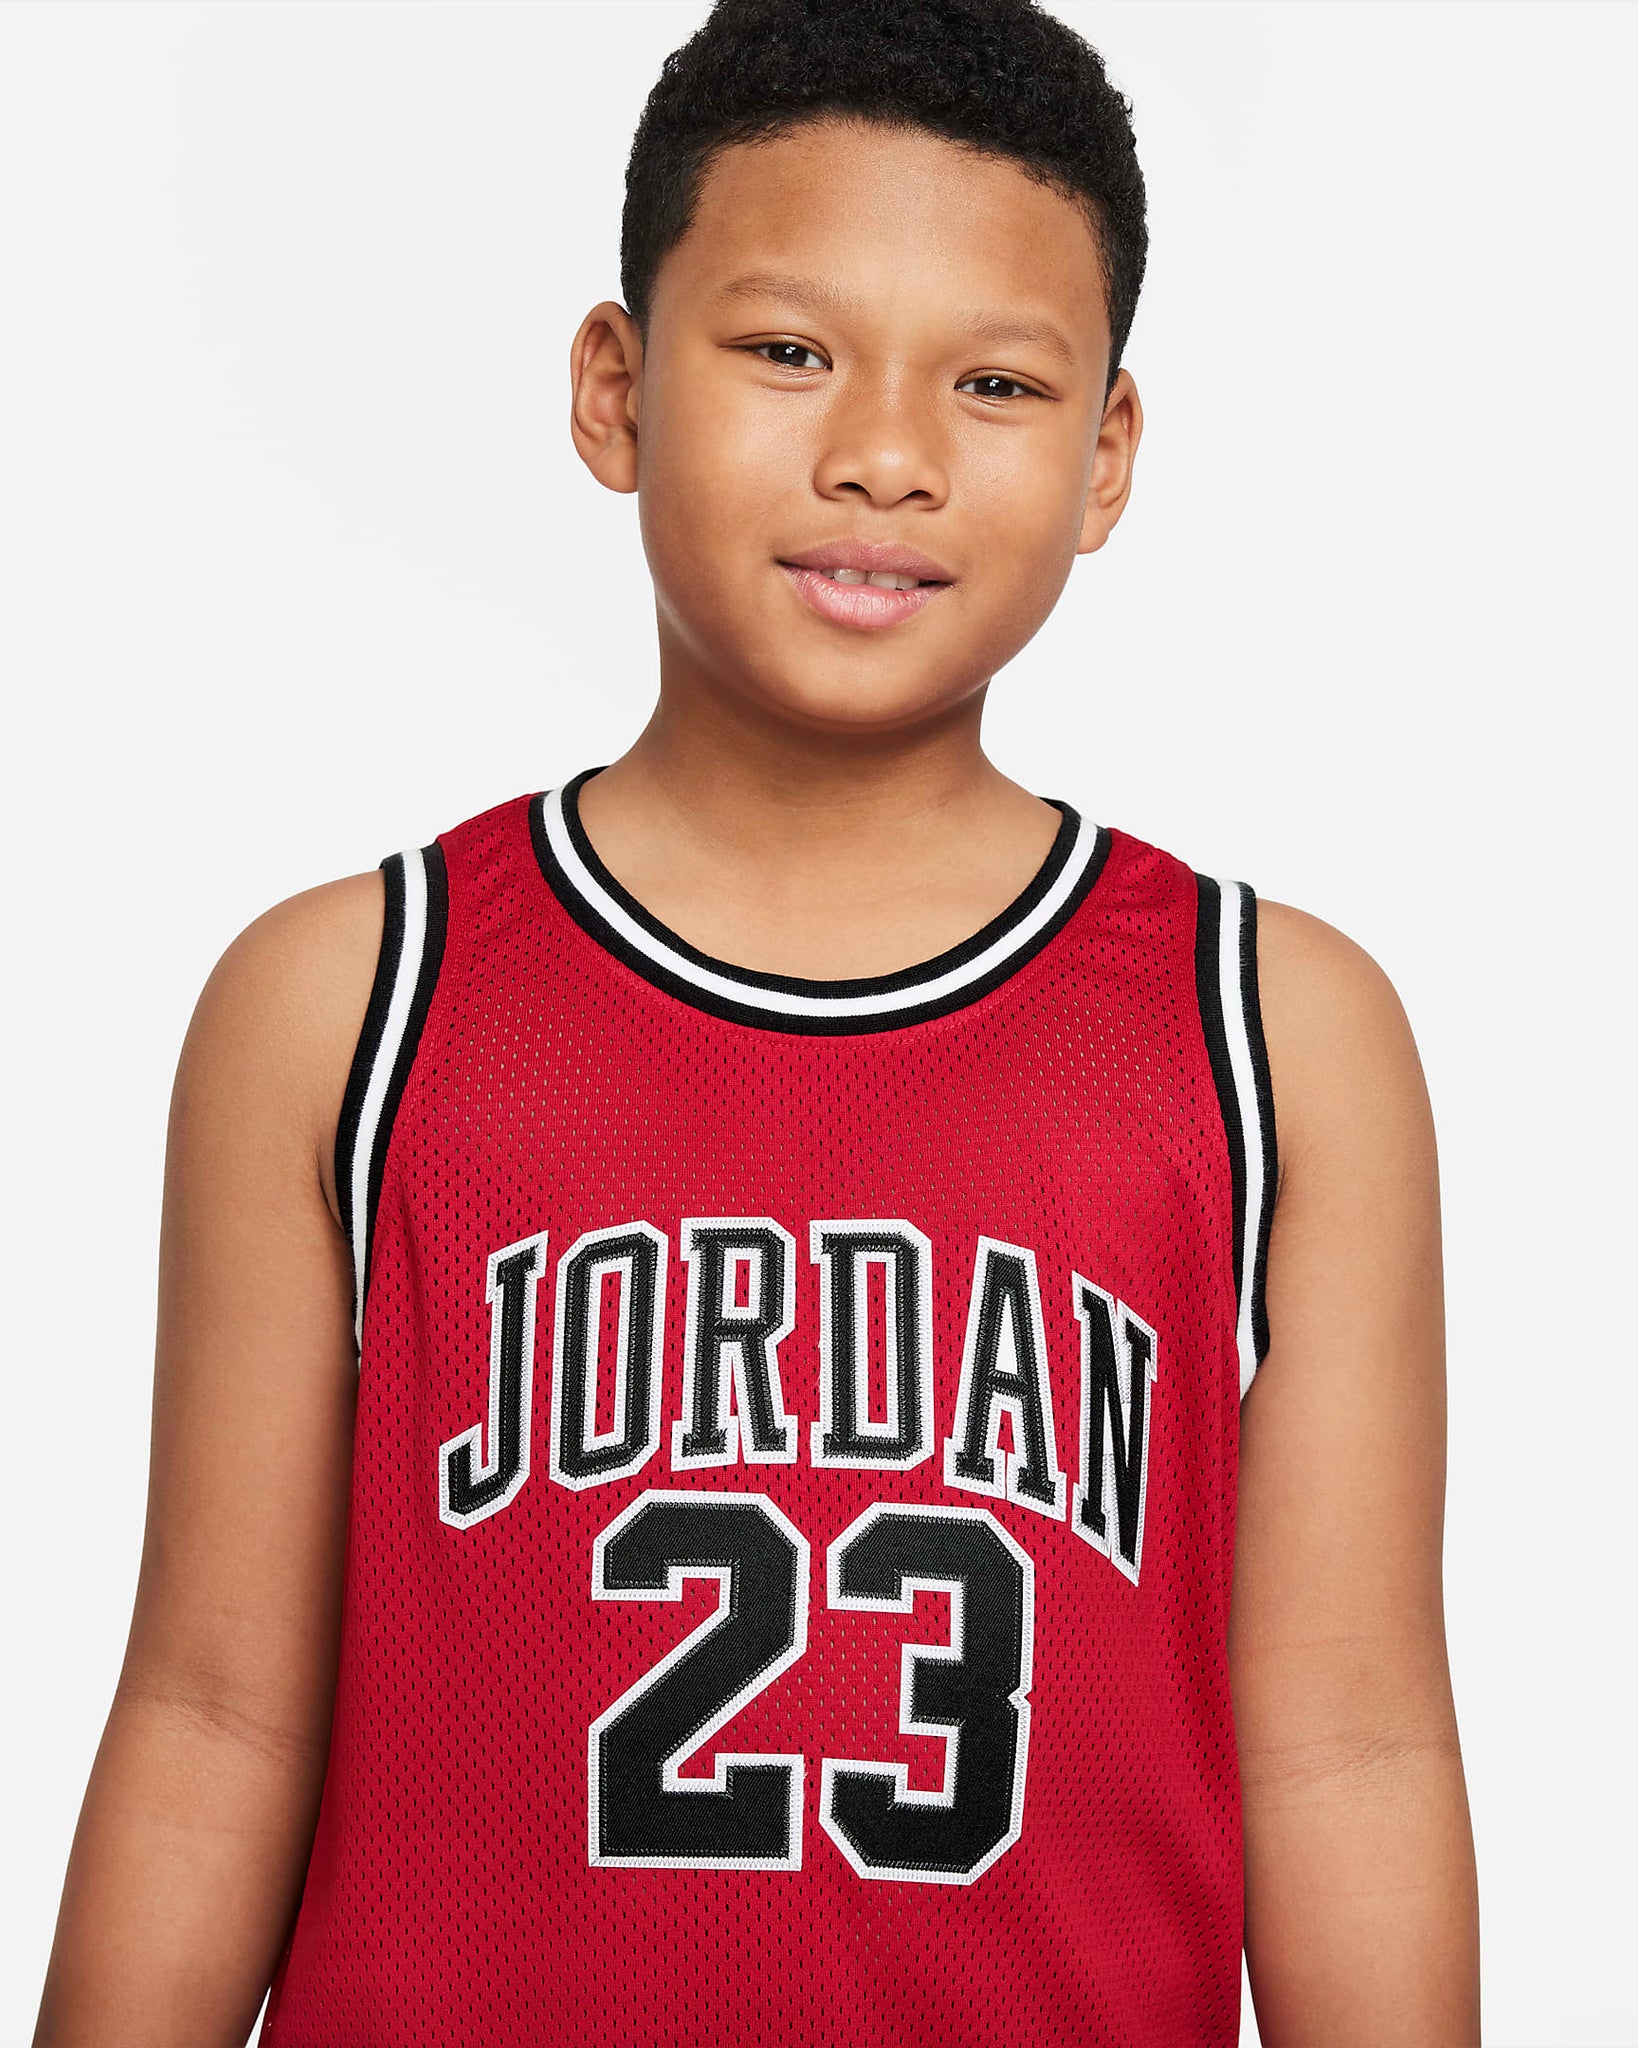 Jordan 21 red basketball jersey